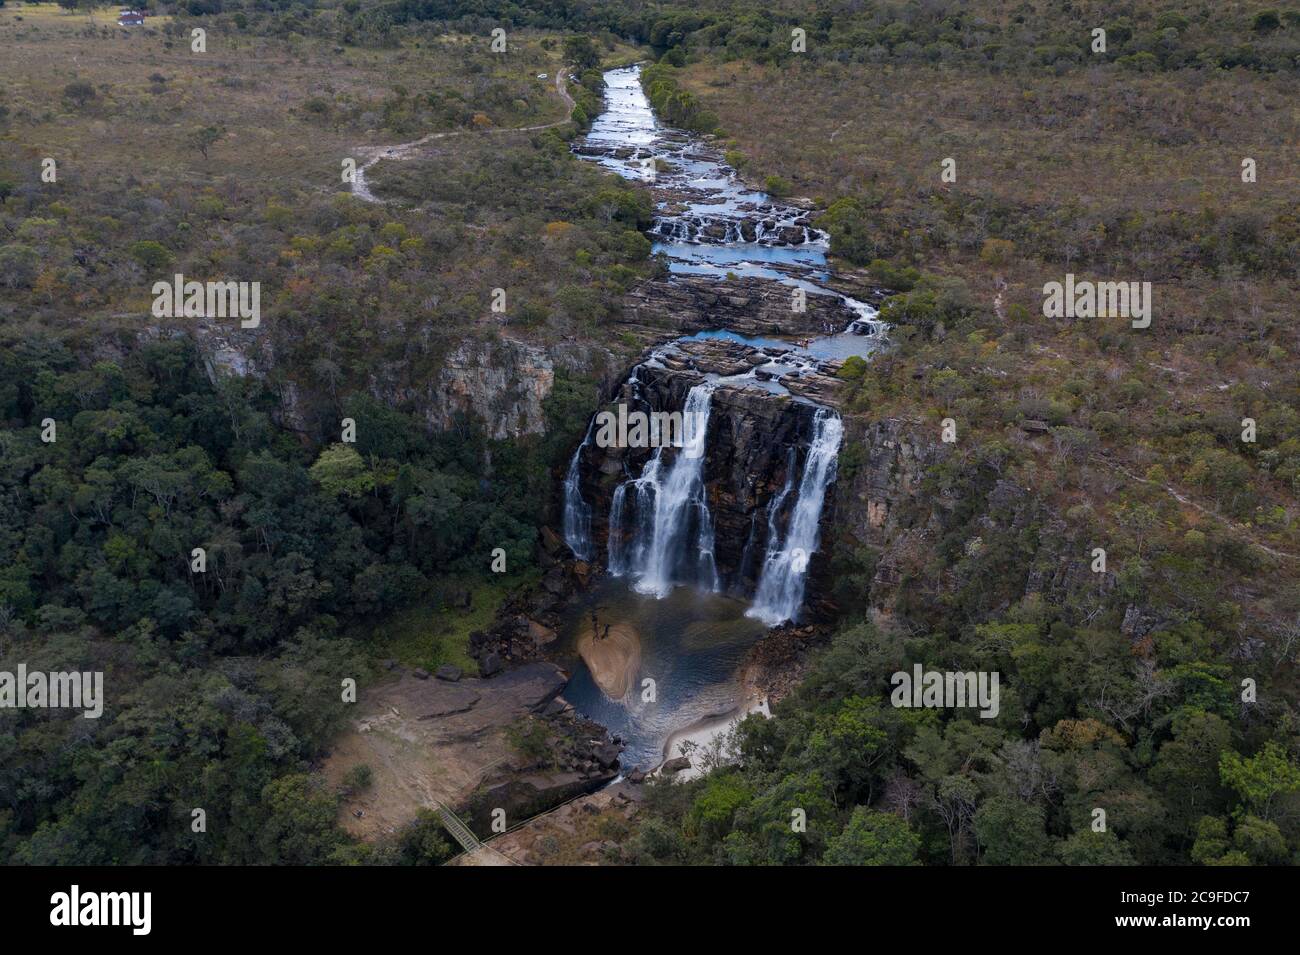 Cataratas, Corumba, estado de Goiás, Brasil Foto de stock